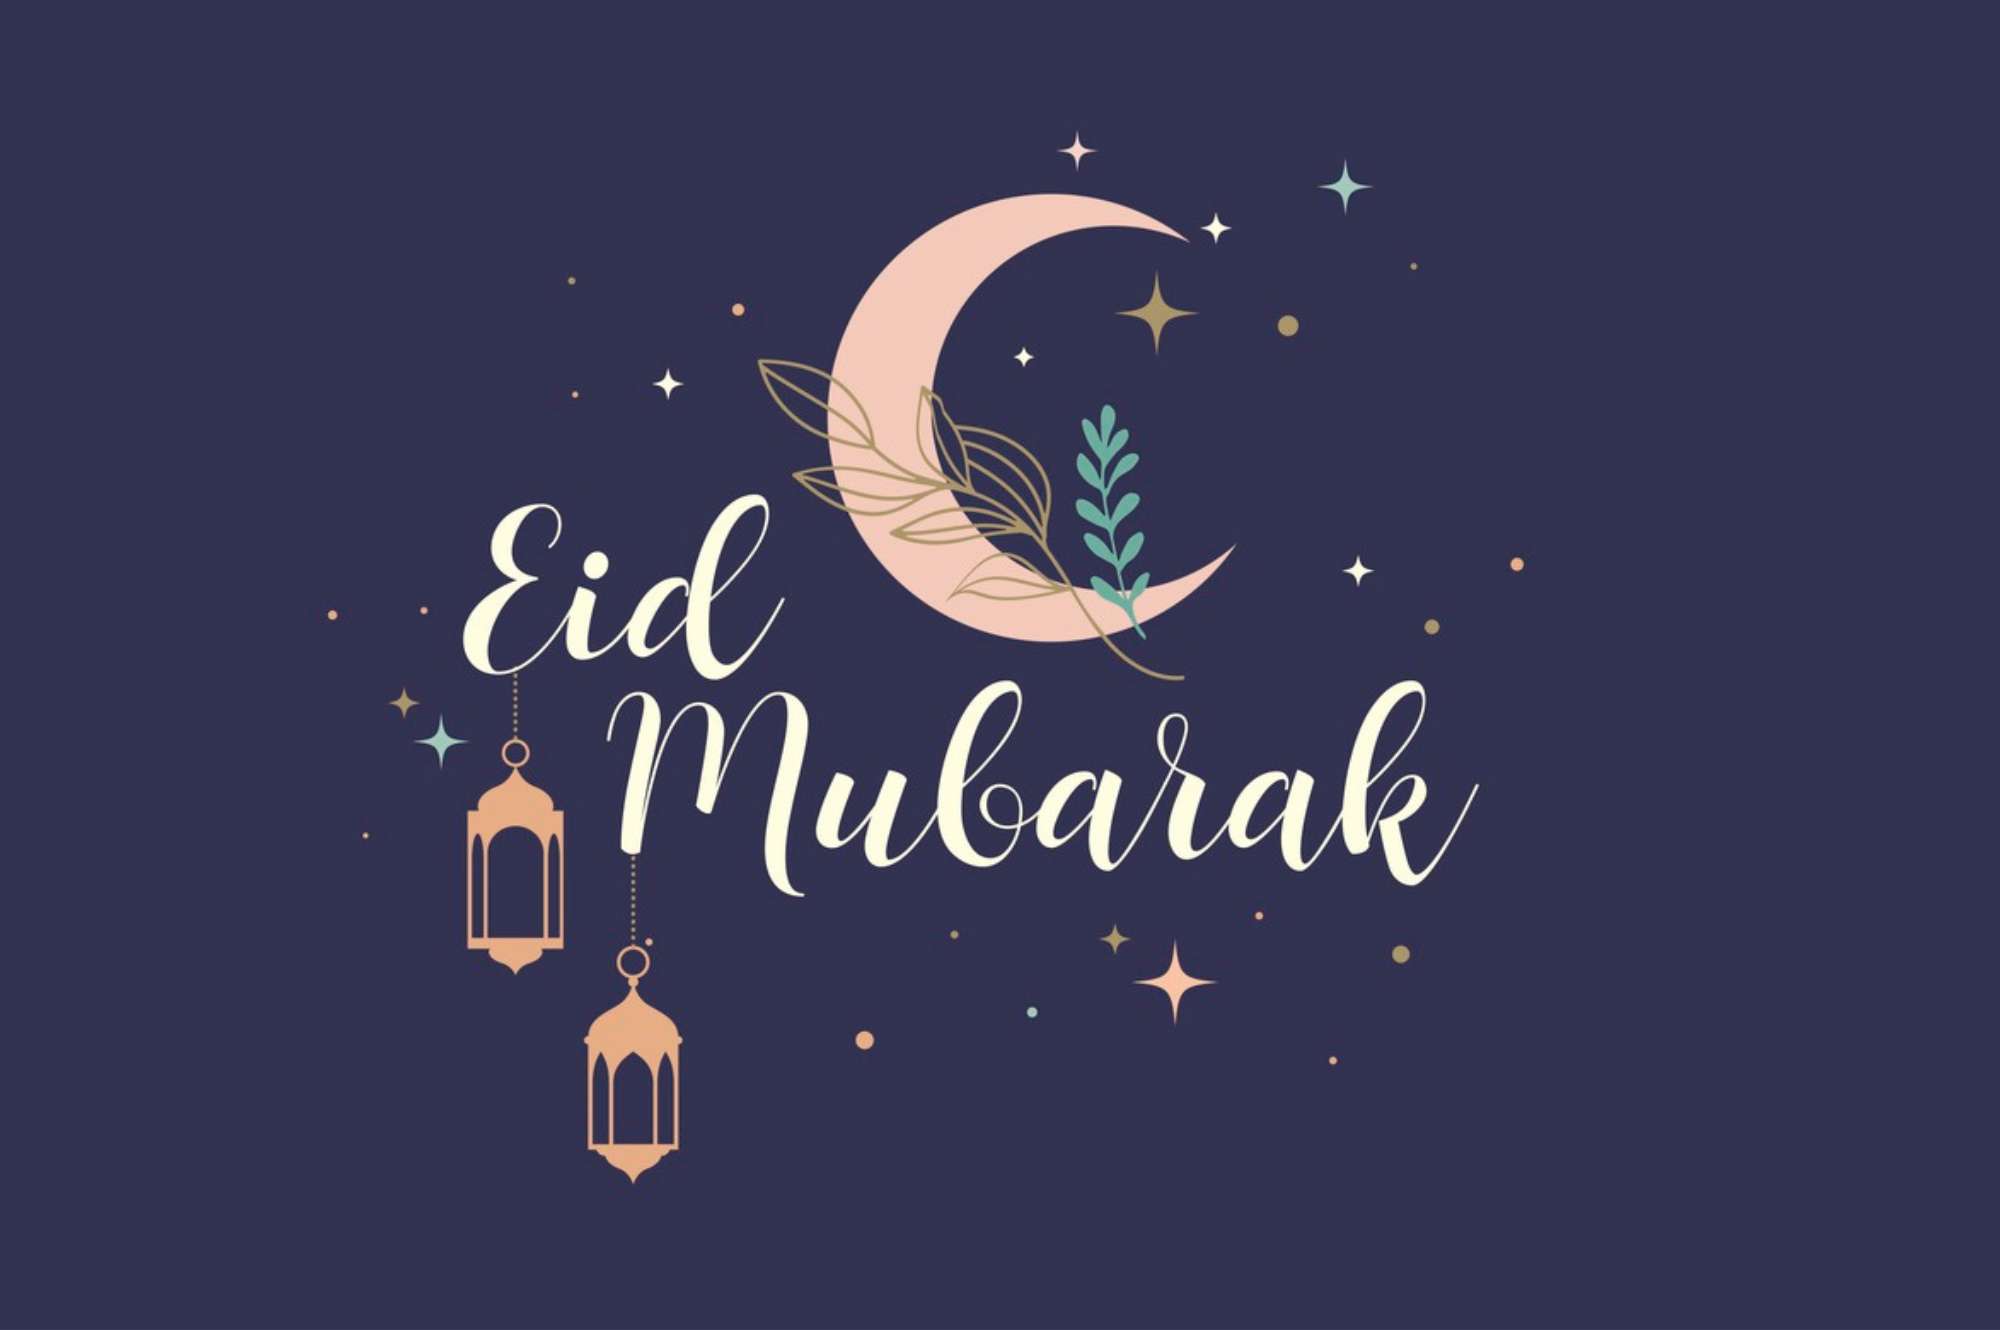 Happy Eid Mubarak from JTL